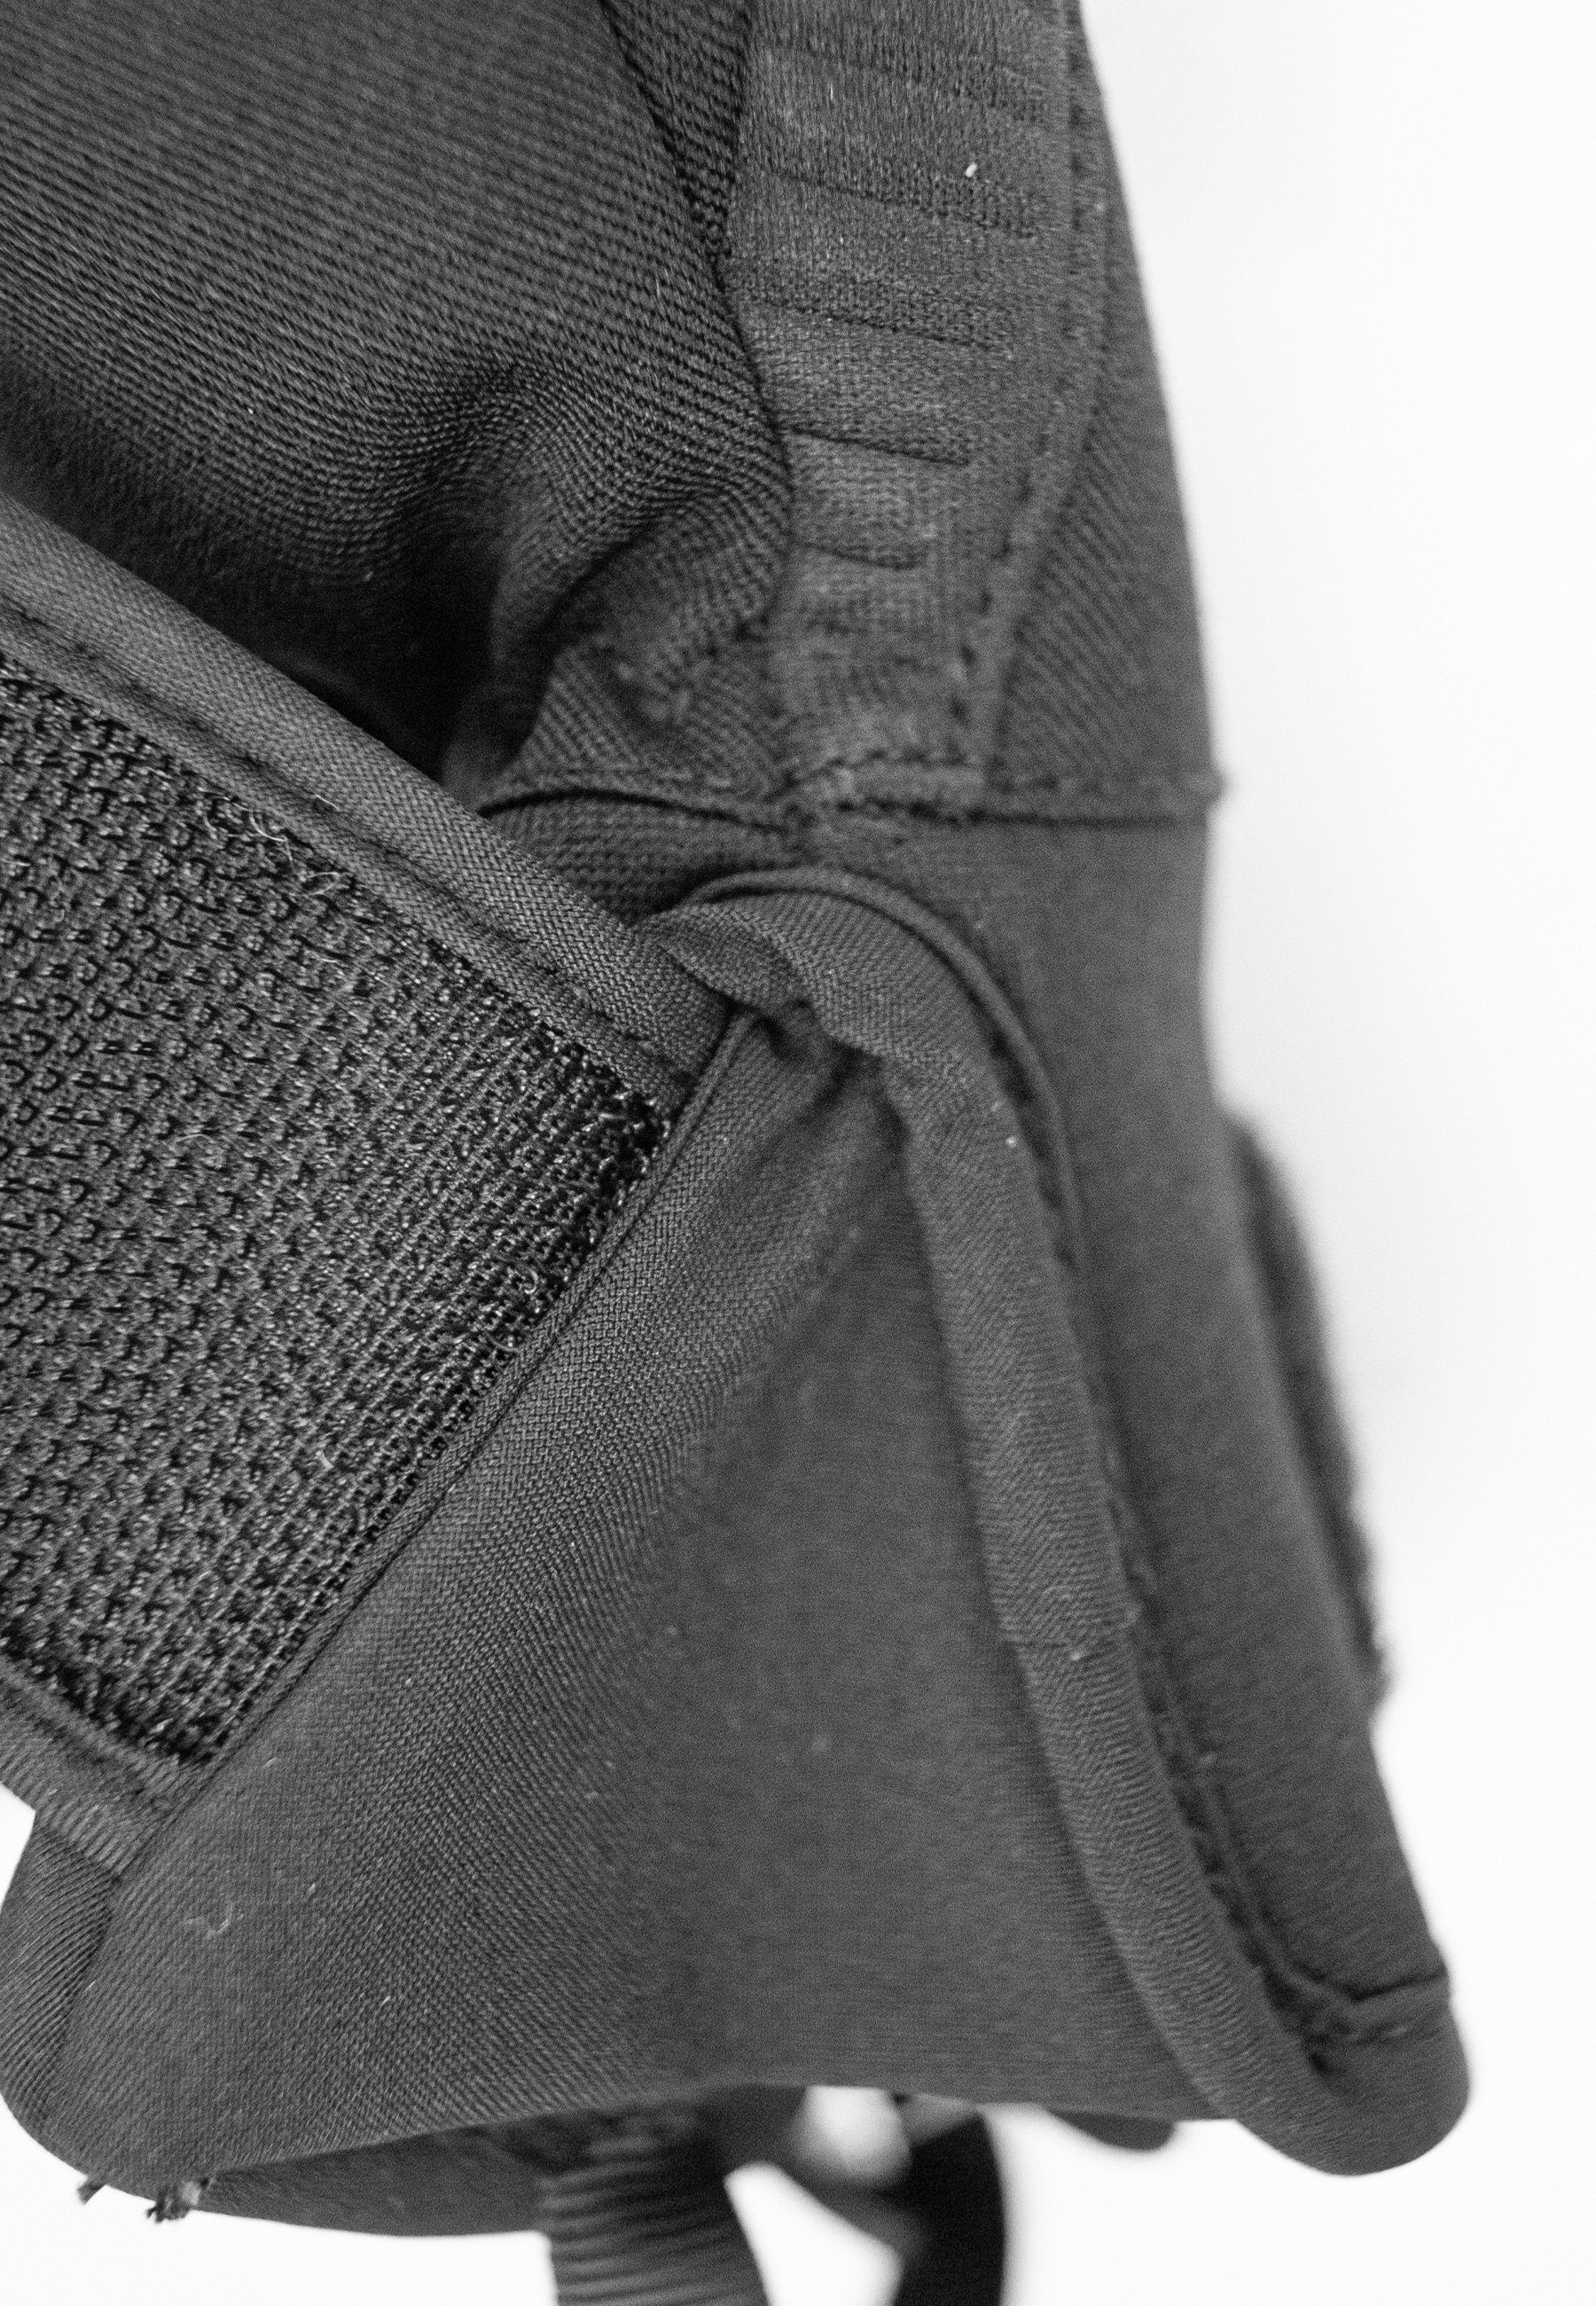 Reusch Skihandschuhe Venom R-TEX® XT atmungsaktivem schwarz-schwarz aus und wasserdichtem Material